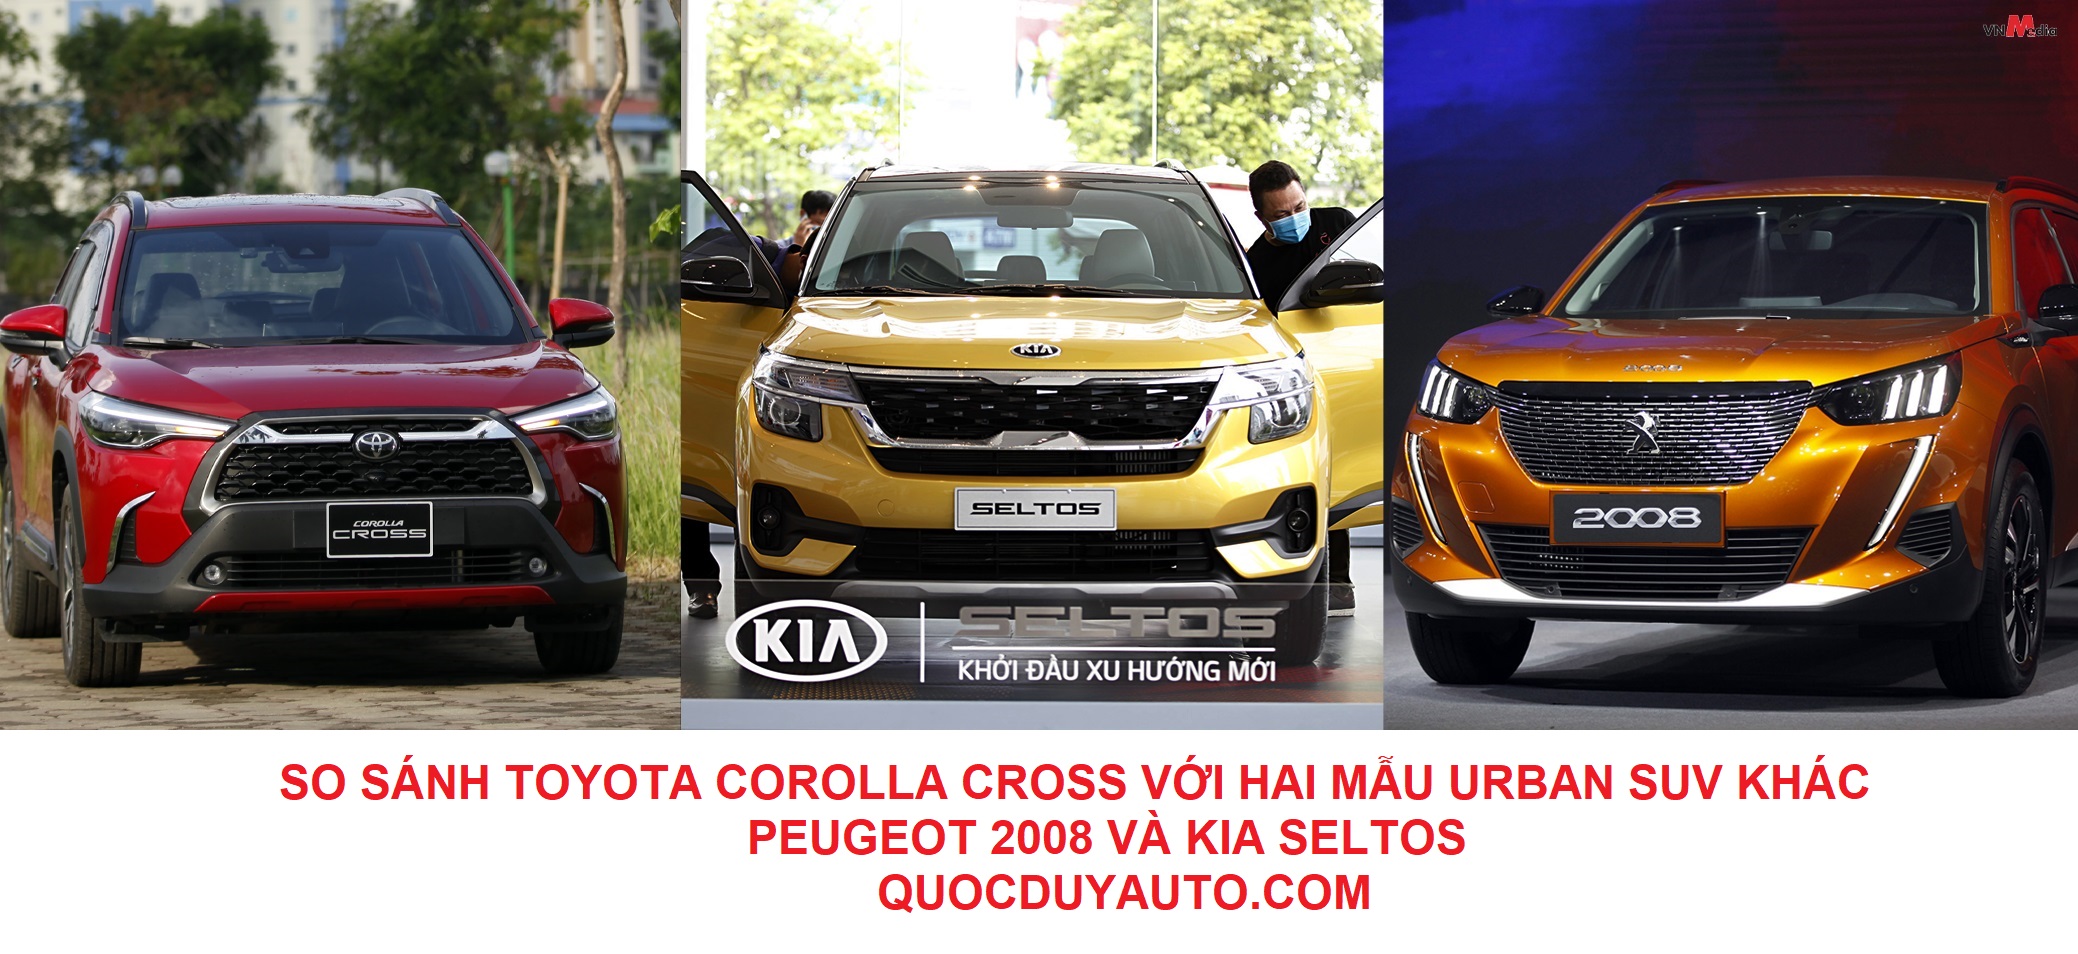 So sánh Toyota Corolla Cross với hai mẫu urban SUV Peugeot 2008 và KIA Seltos